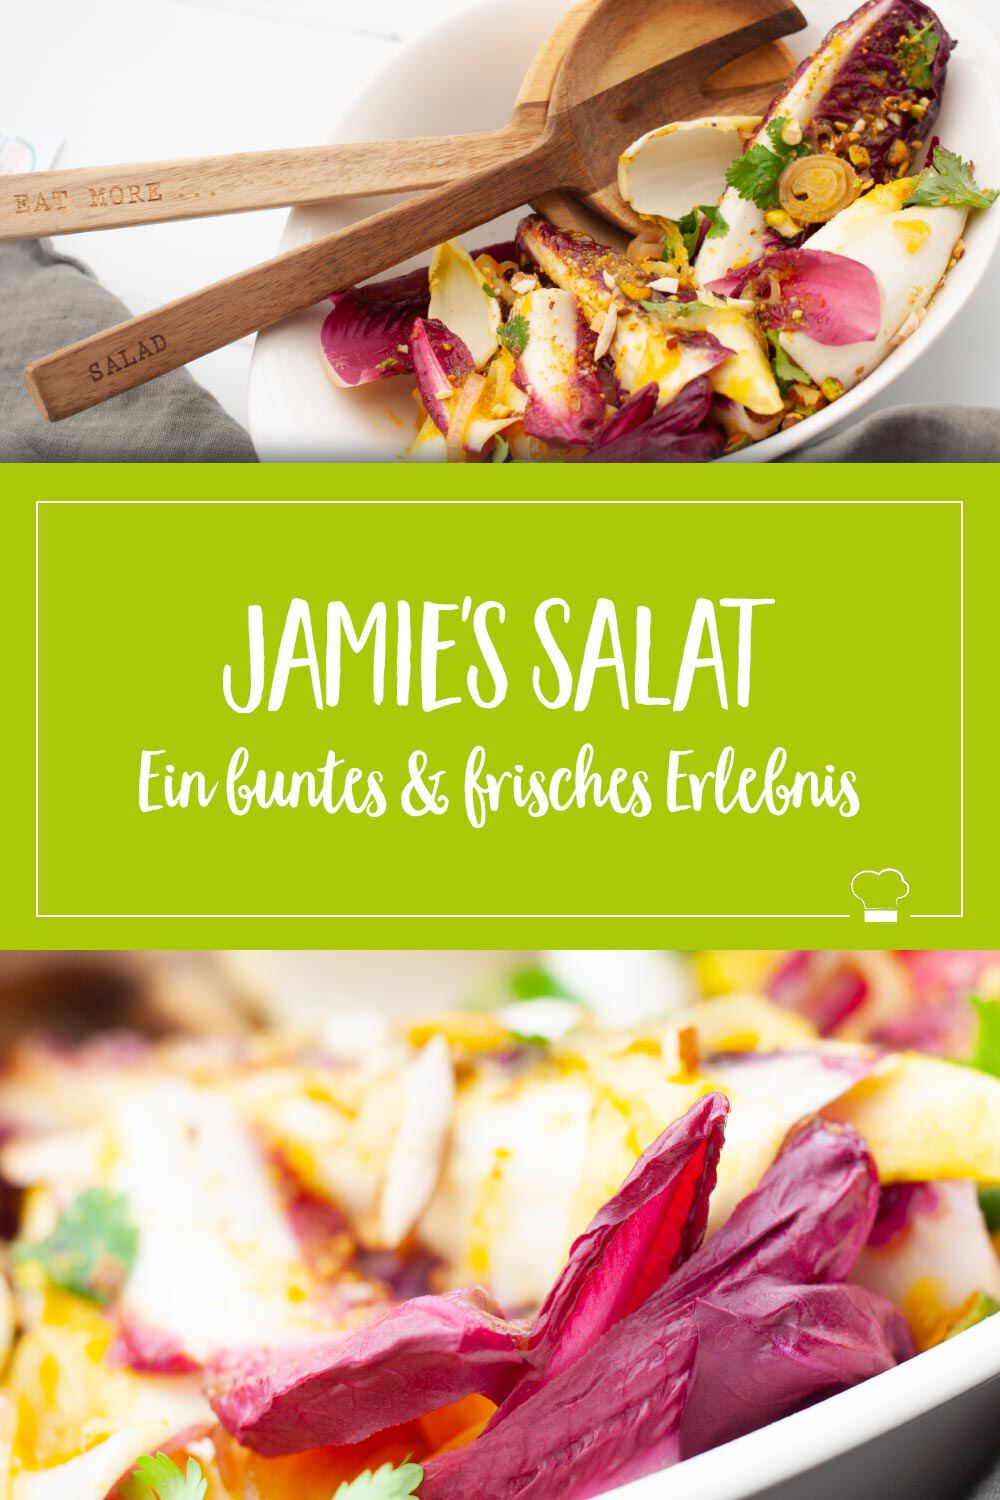 Jamie Oliver Salat